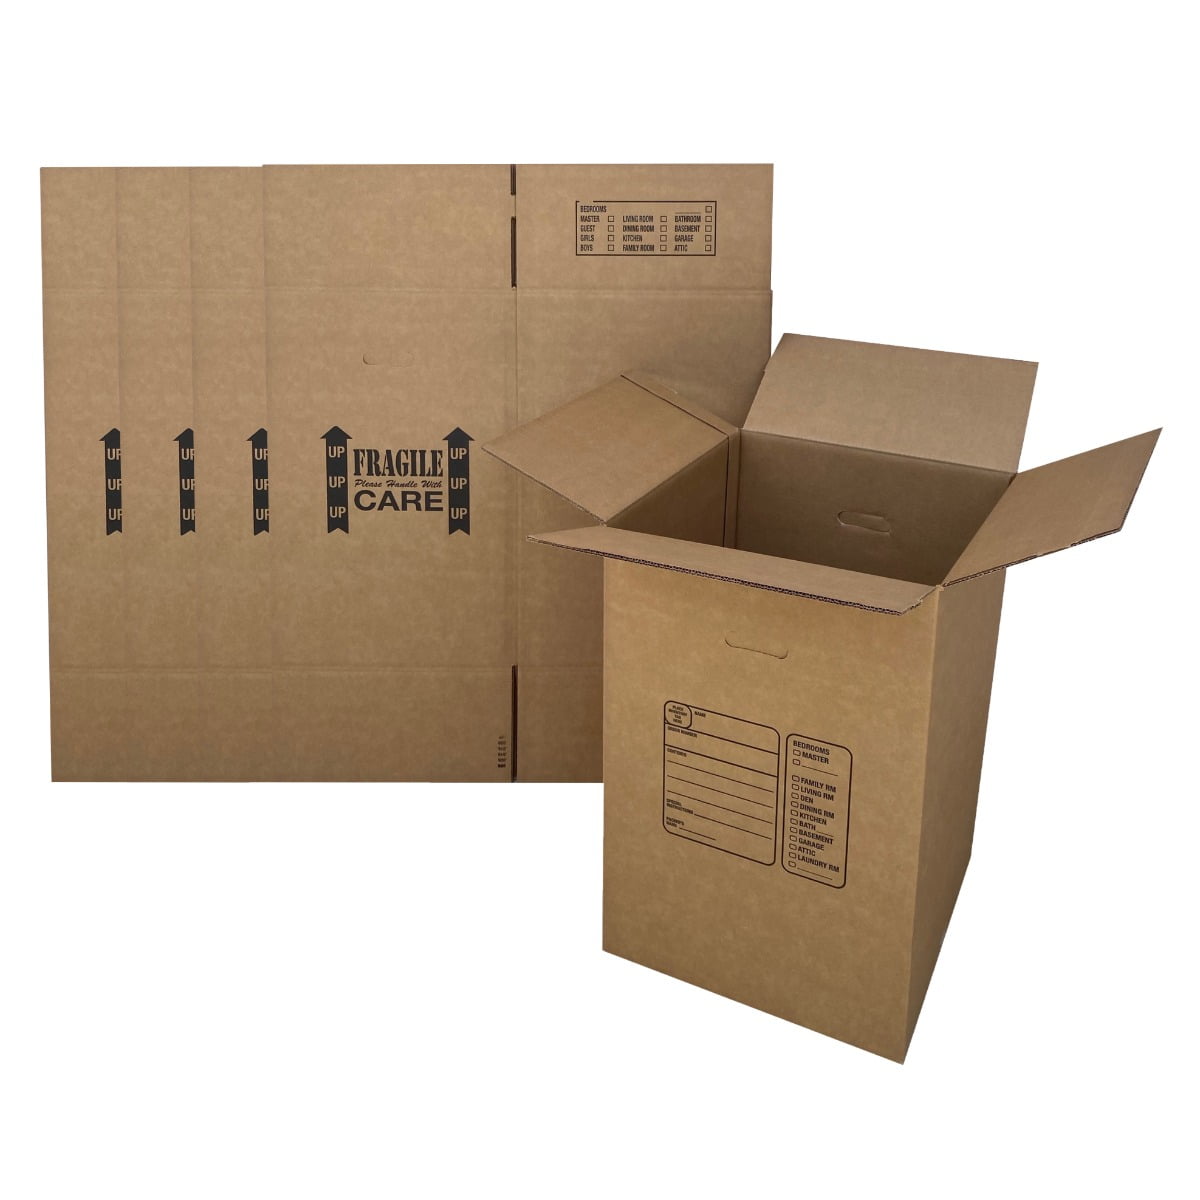 Large Heavy-Duty Double Wall Moving Box - 18” x 18” x 24” (L x W x H)